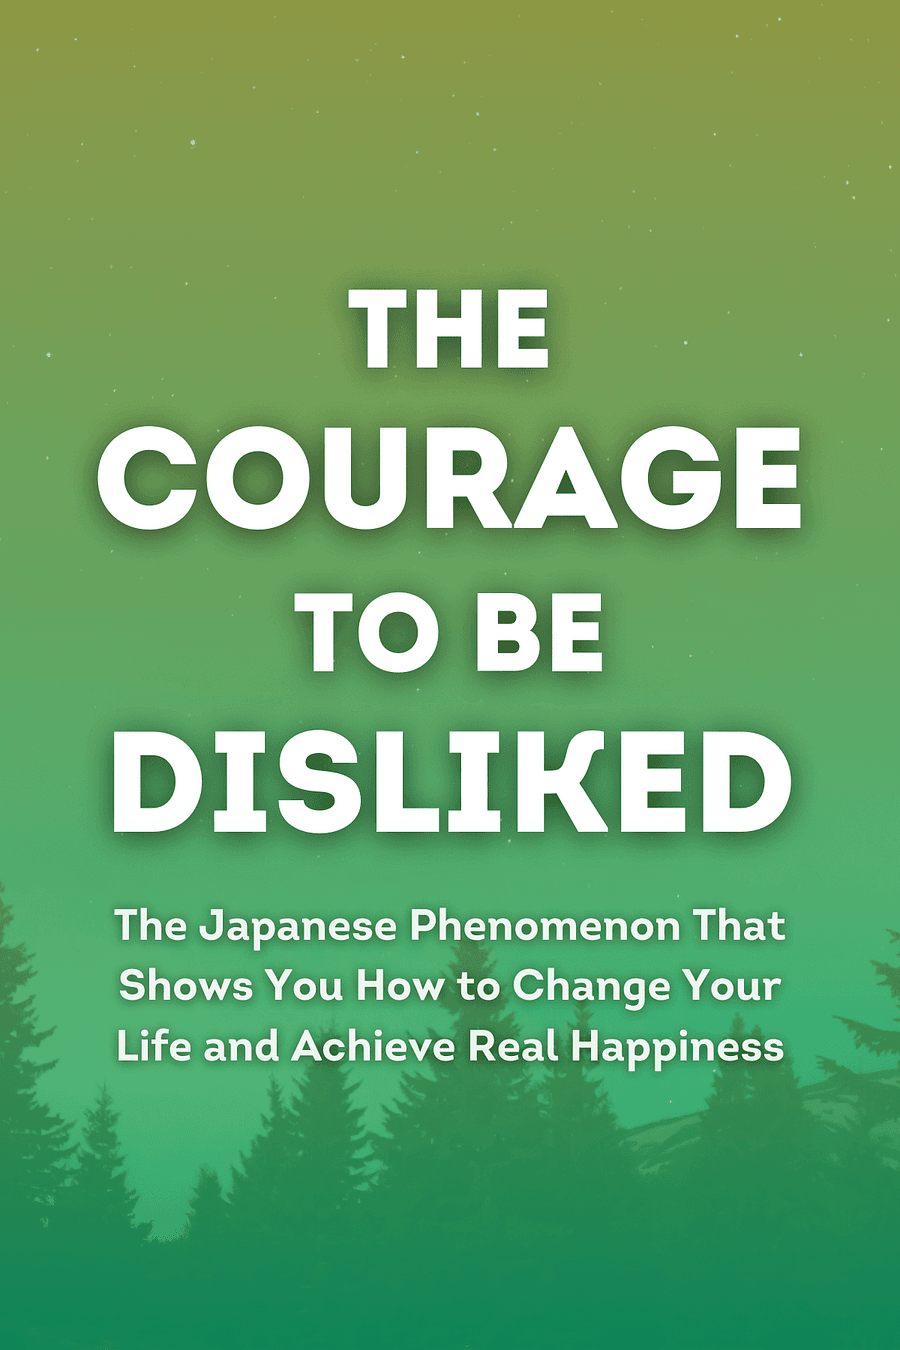 The Courage to Be Disliked by Ichiro Kishimi, Fumitake Koga - Book Summary